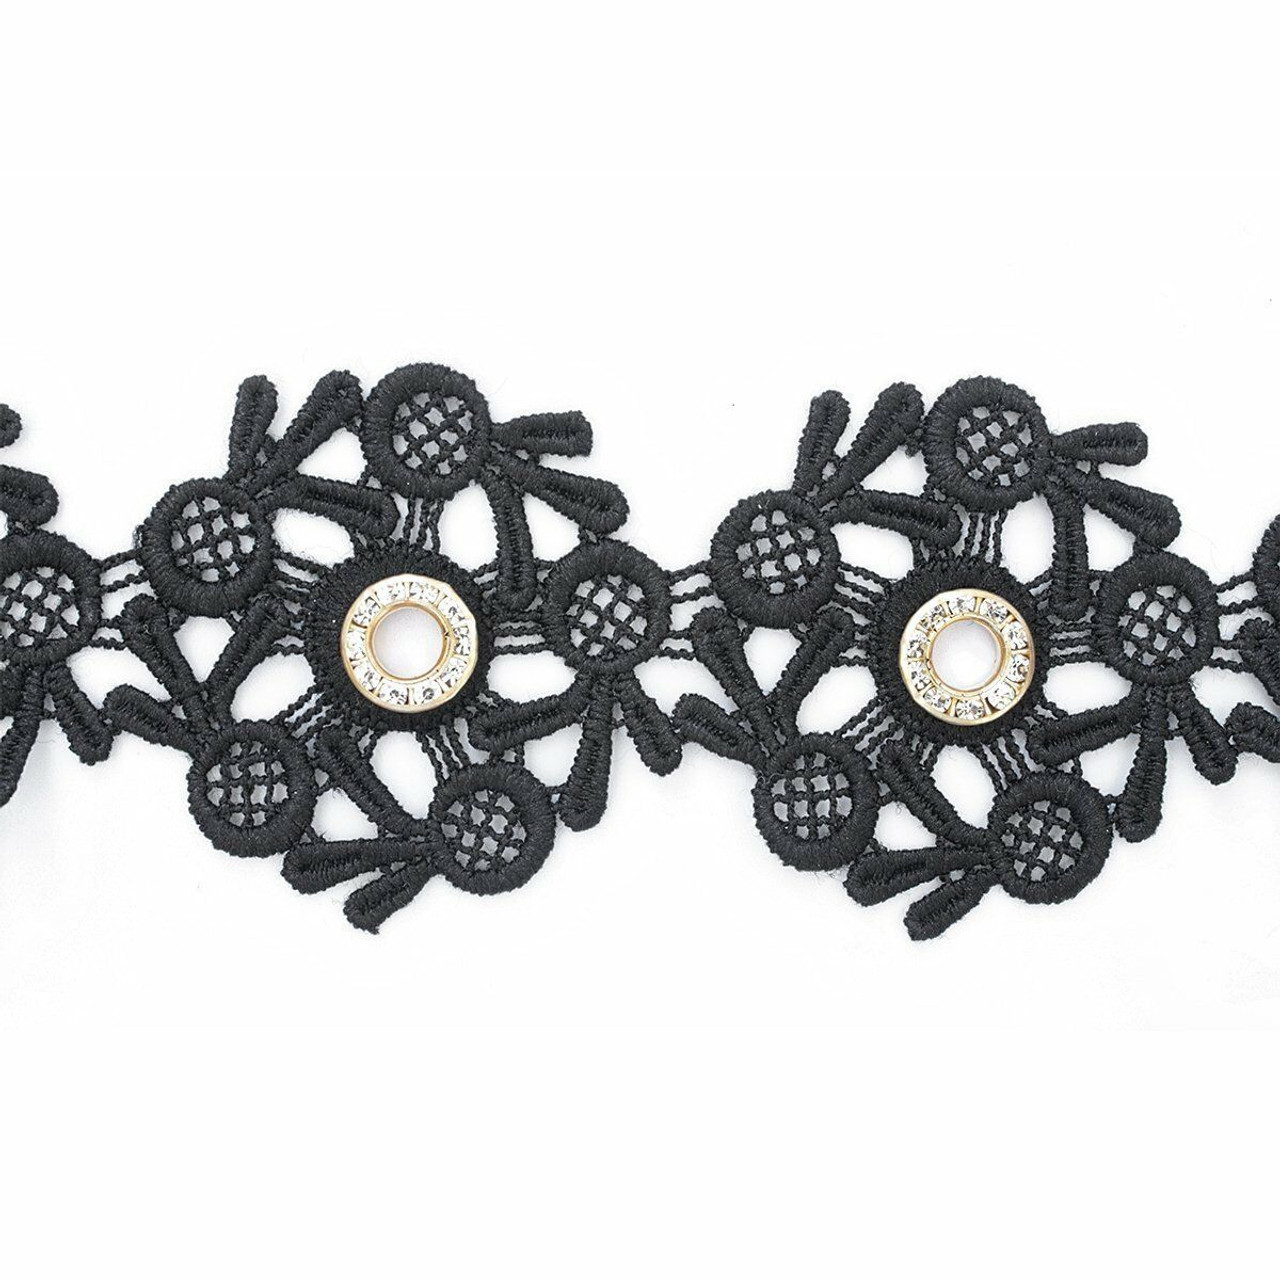 40mm Cotton Crochet Lace Trim With Diamante Studded Eyelets - Black - 1m -  Trimming Shop